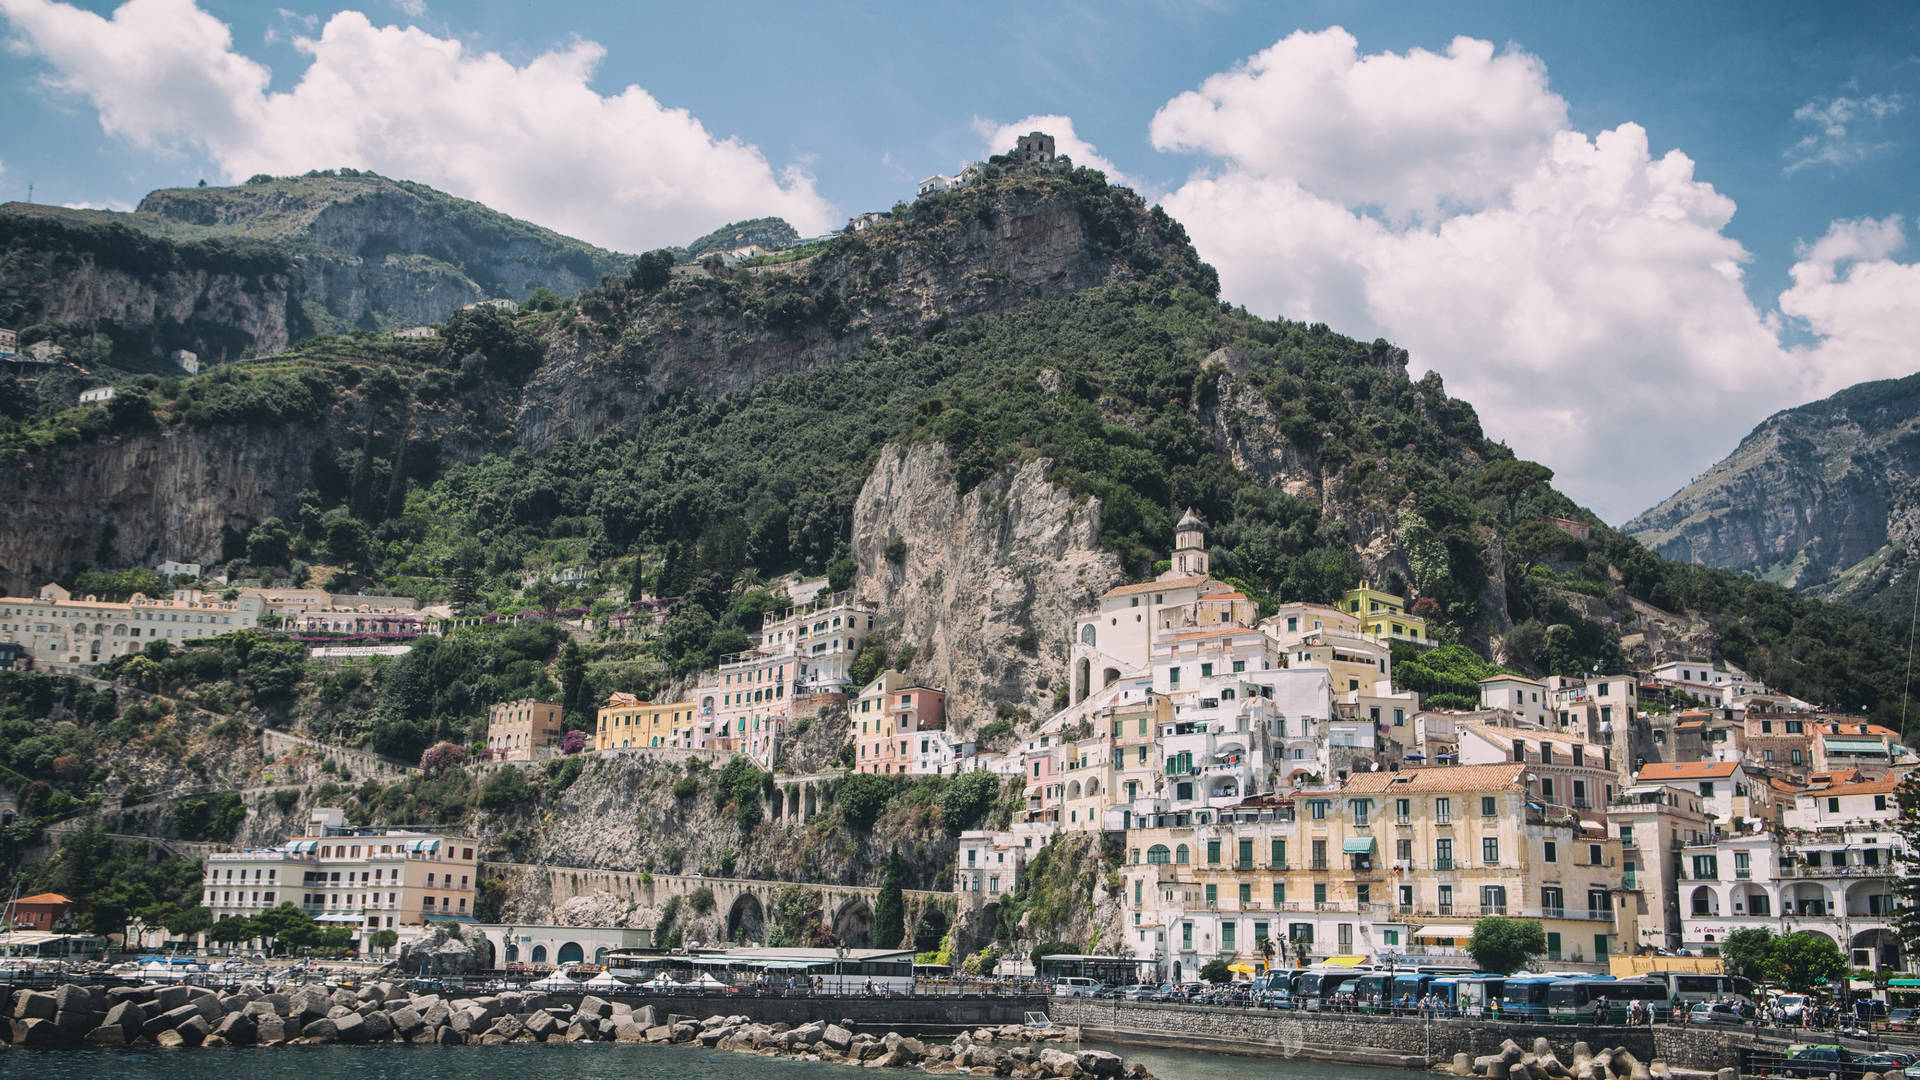 Desaturated Seaside Town In Amalfi Coast Picture